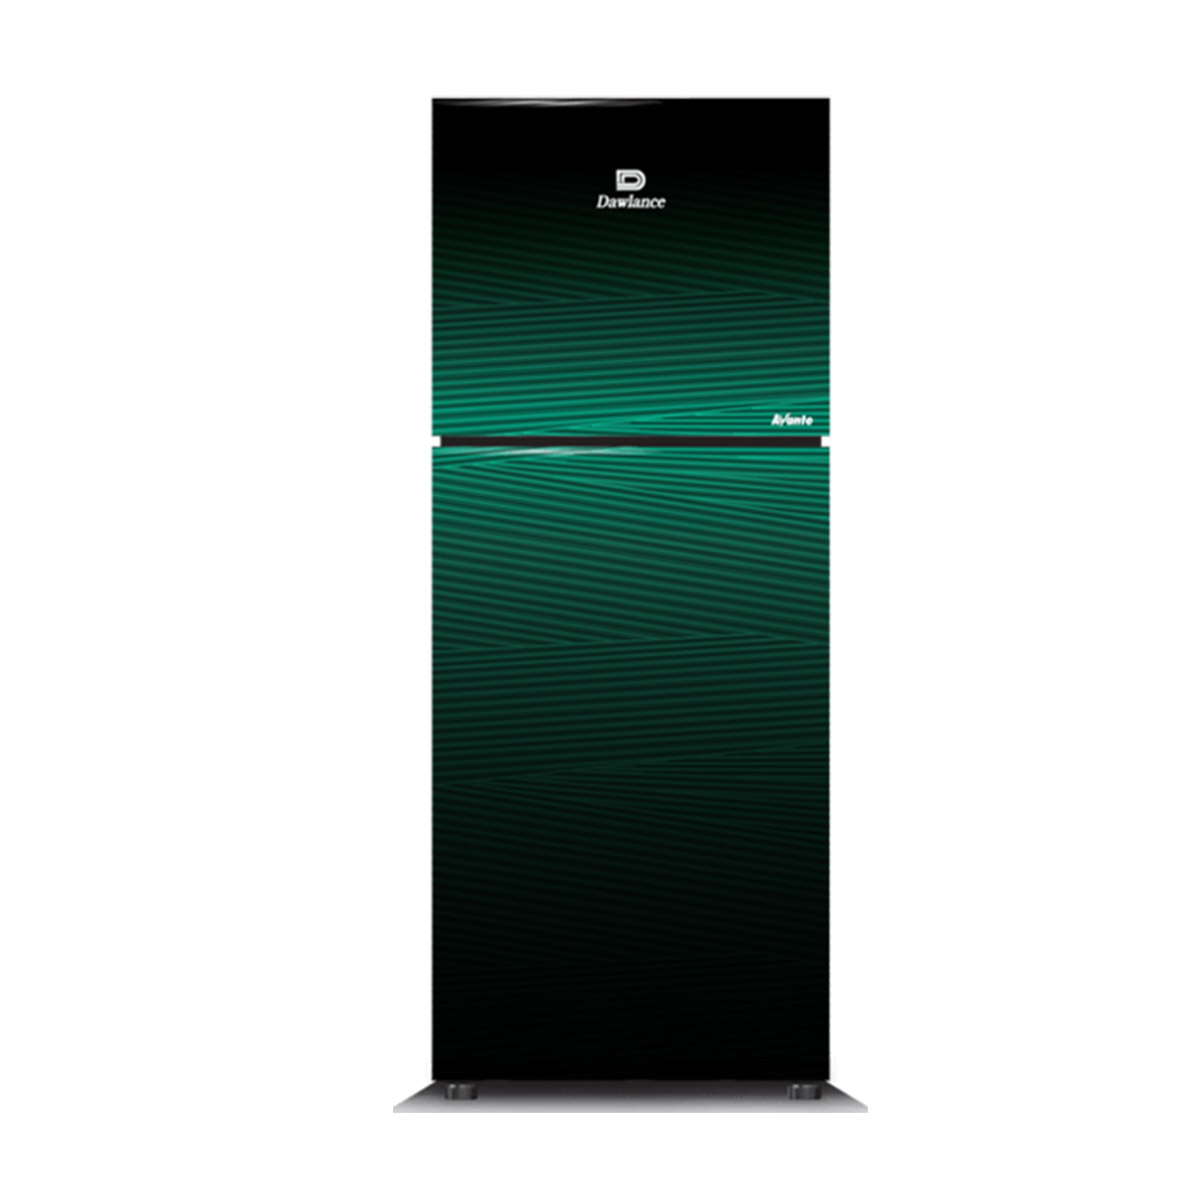 Dawlance Refrigerator 9191 Avante Noir Green